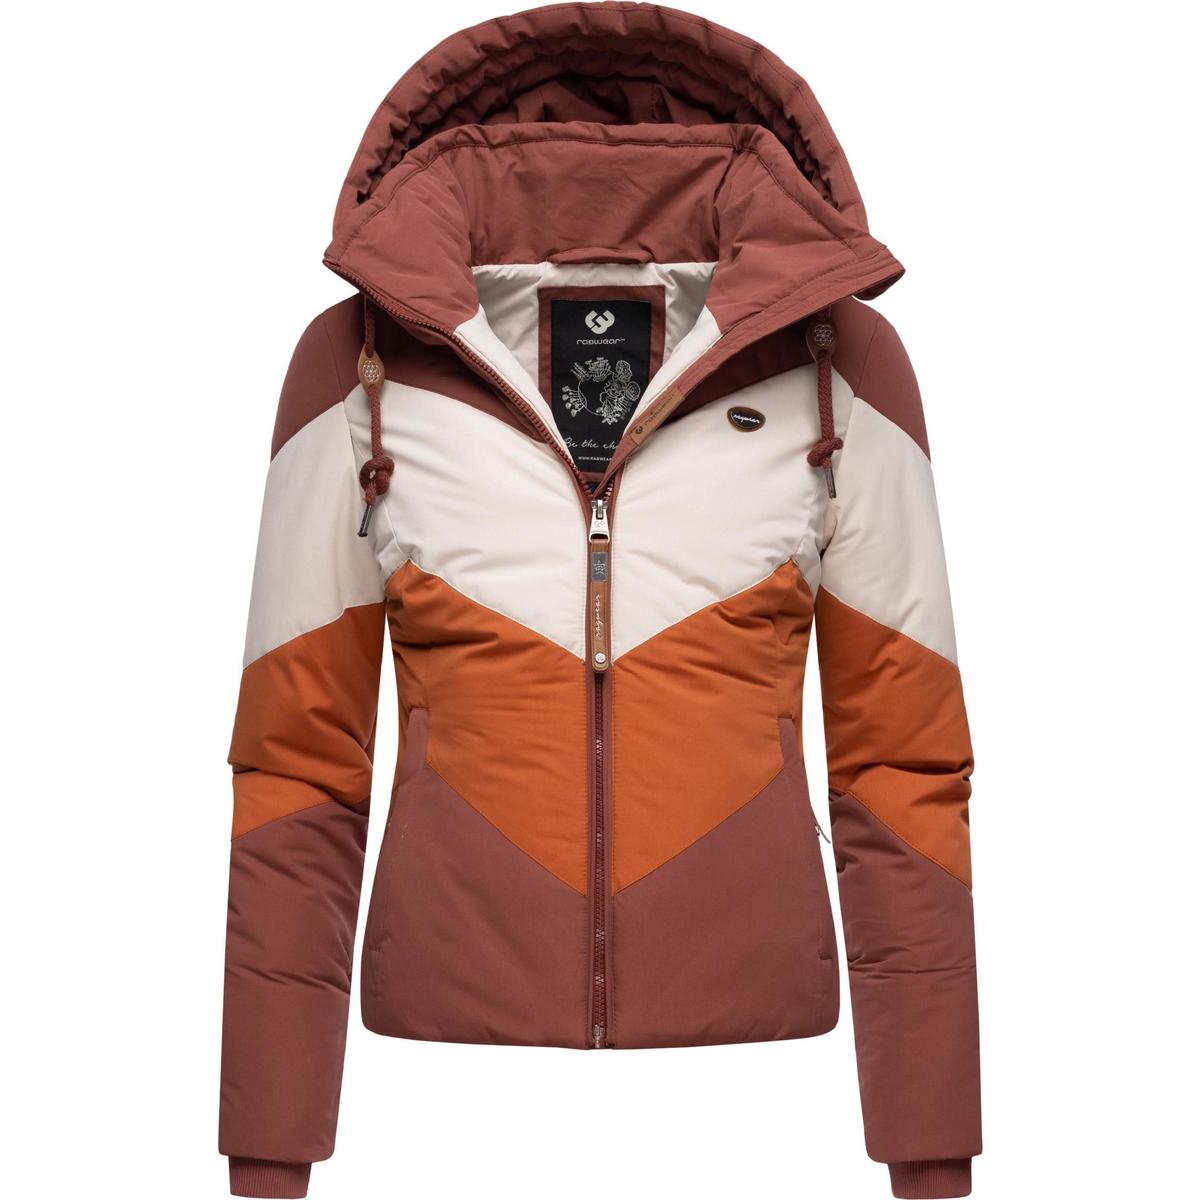 Ragwear Winterjacke Kleidung 139,99 Novva Block € - Jacken Braun Damen